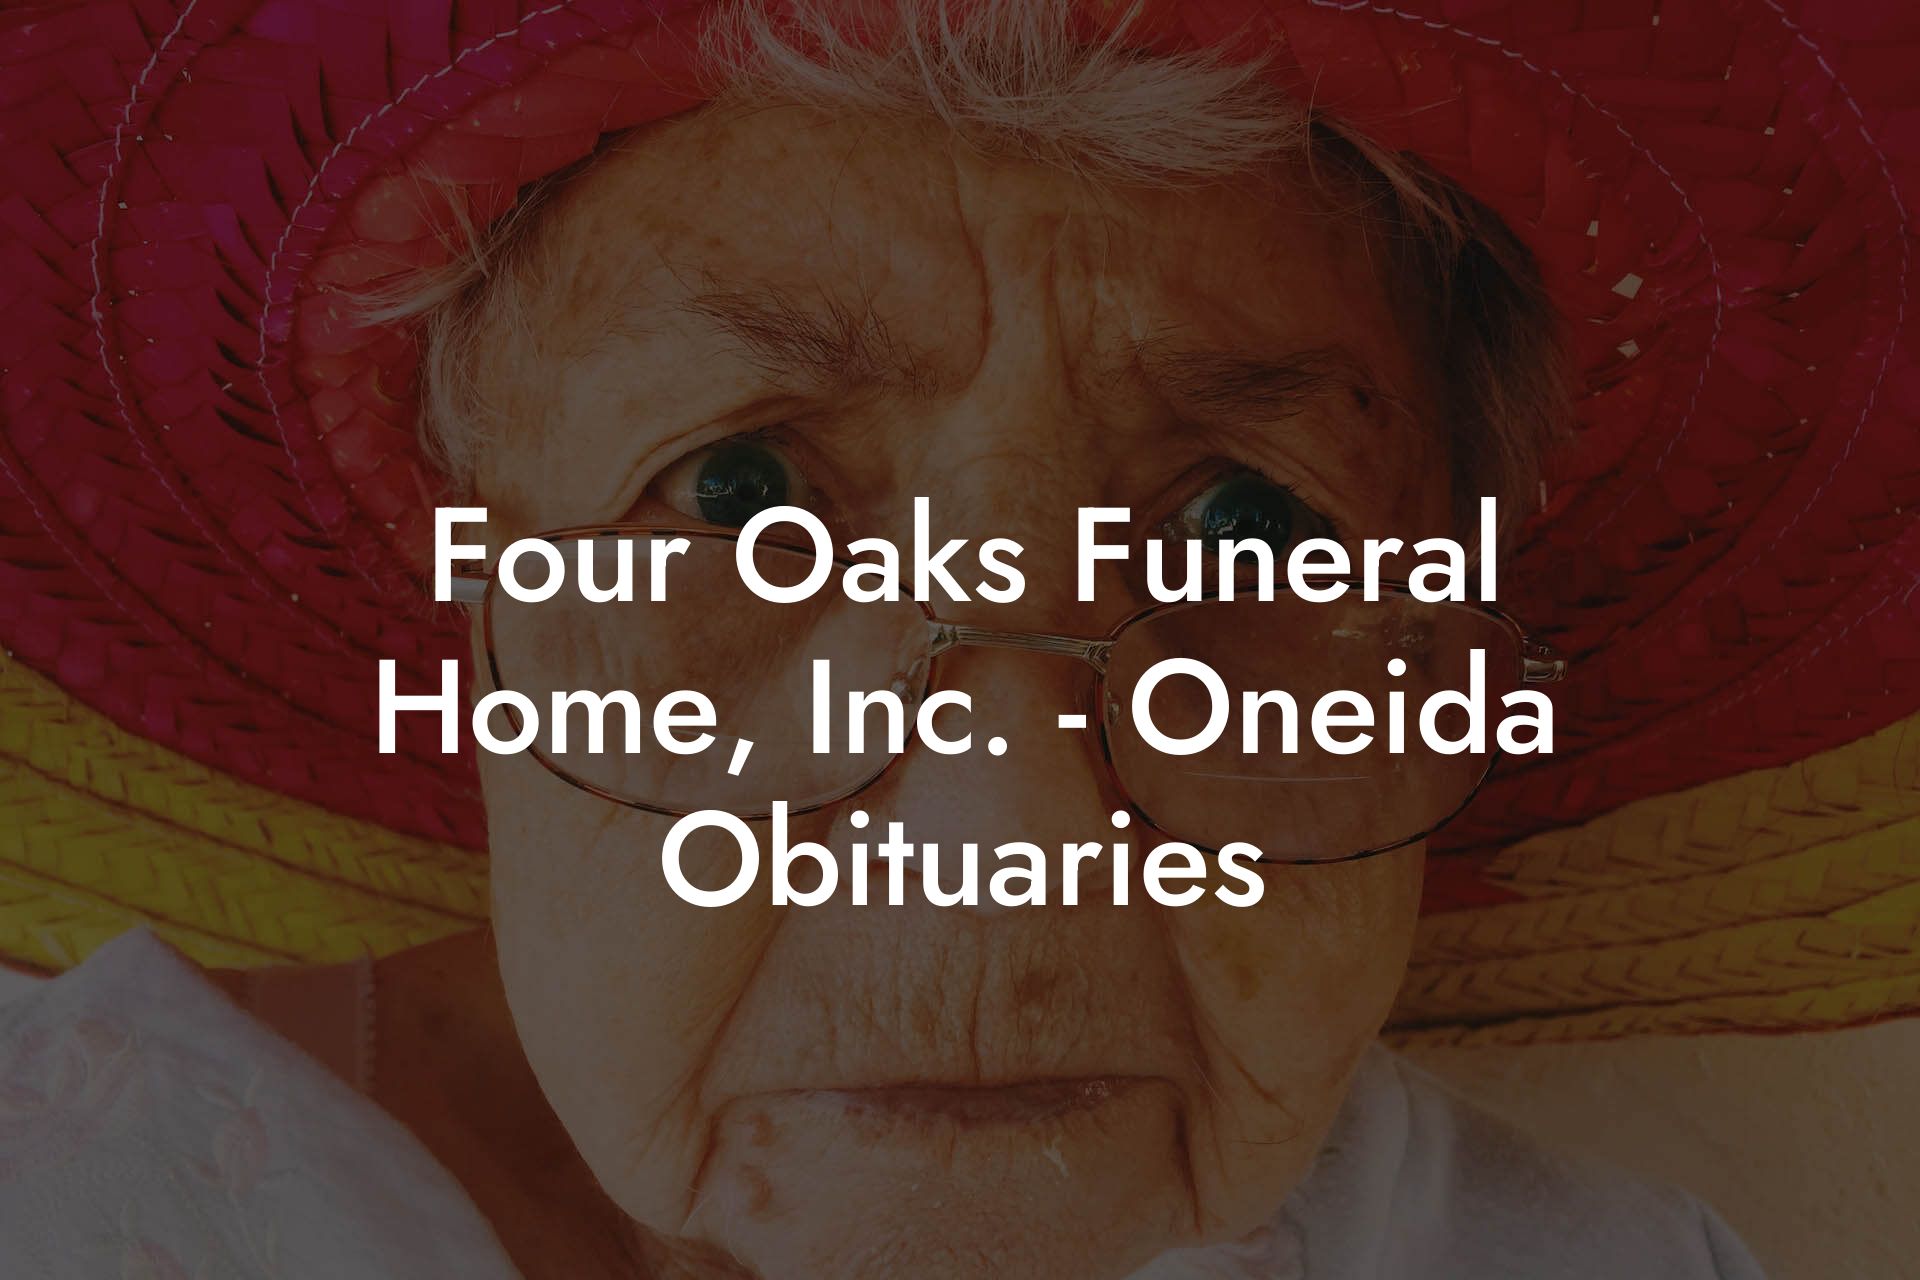 Four Oaks Funeral Home, Inc. - Oneida Obituaries